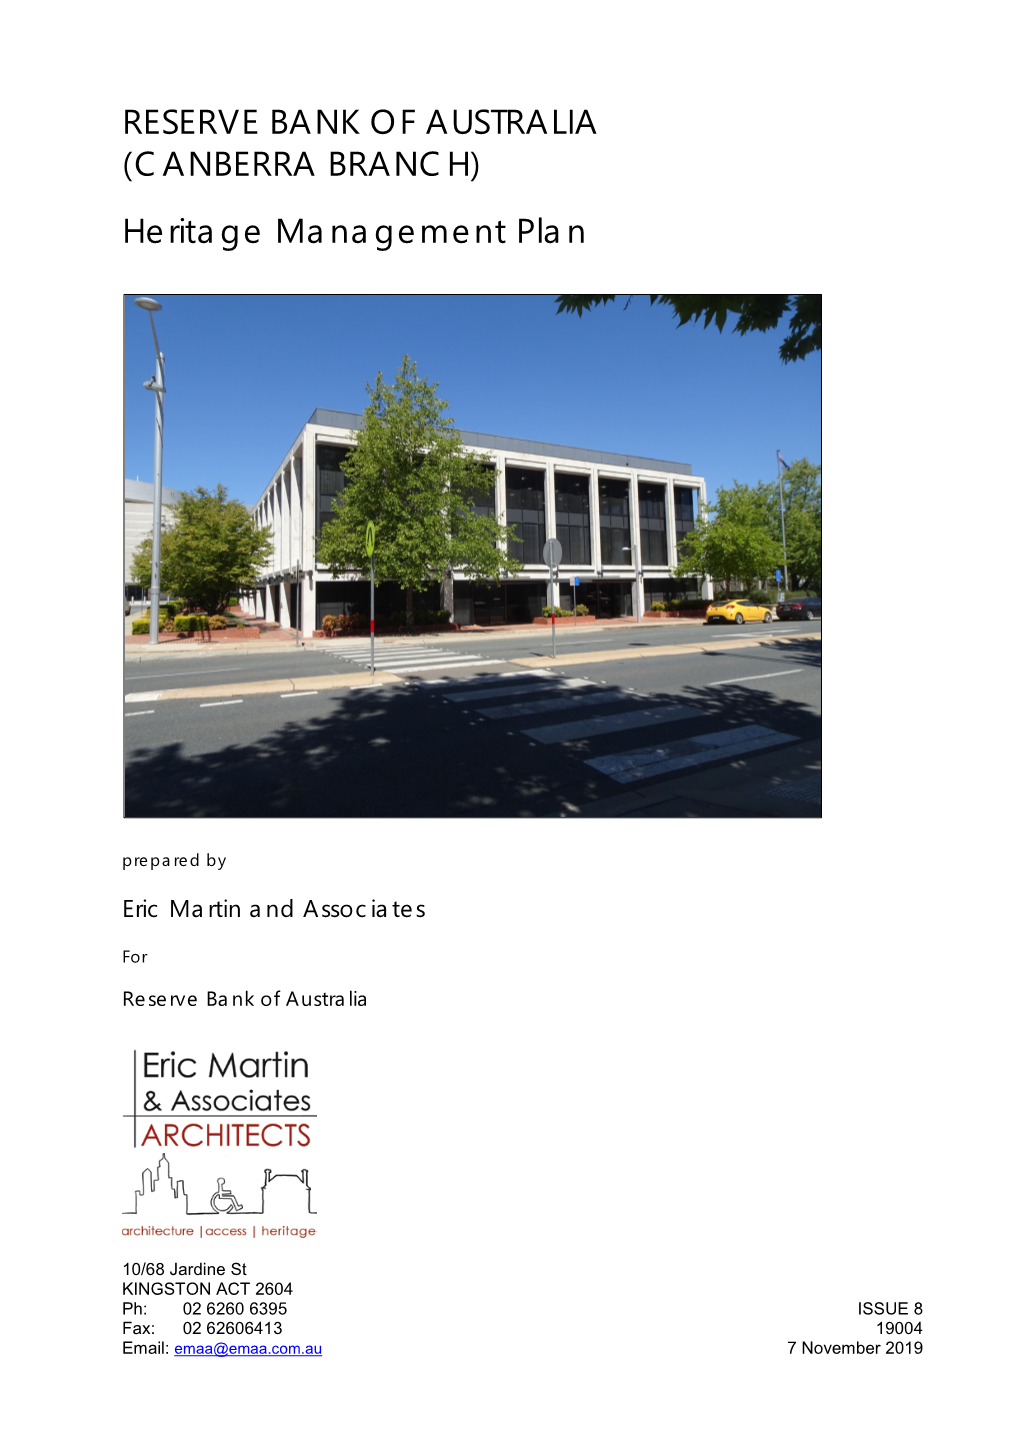 Reserve Bank of Australia (Canberra Branch) Heritage Management Plan, Final 2012